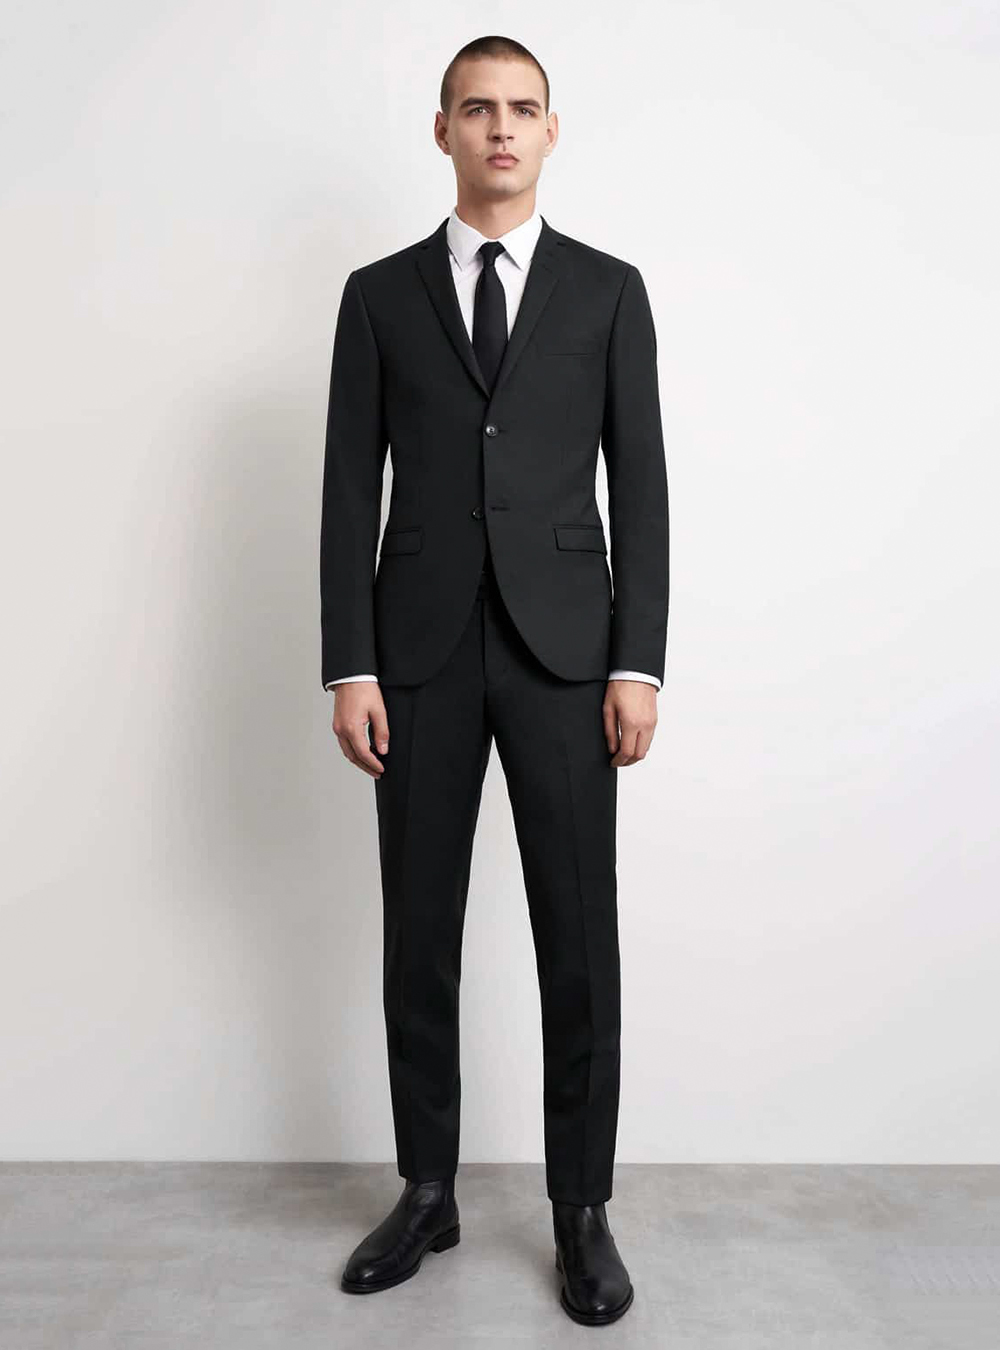 black suit, white shirt, black tie, and black Chelseas